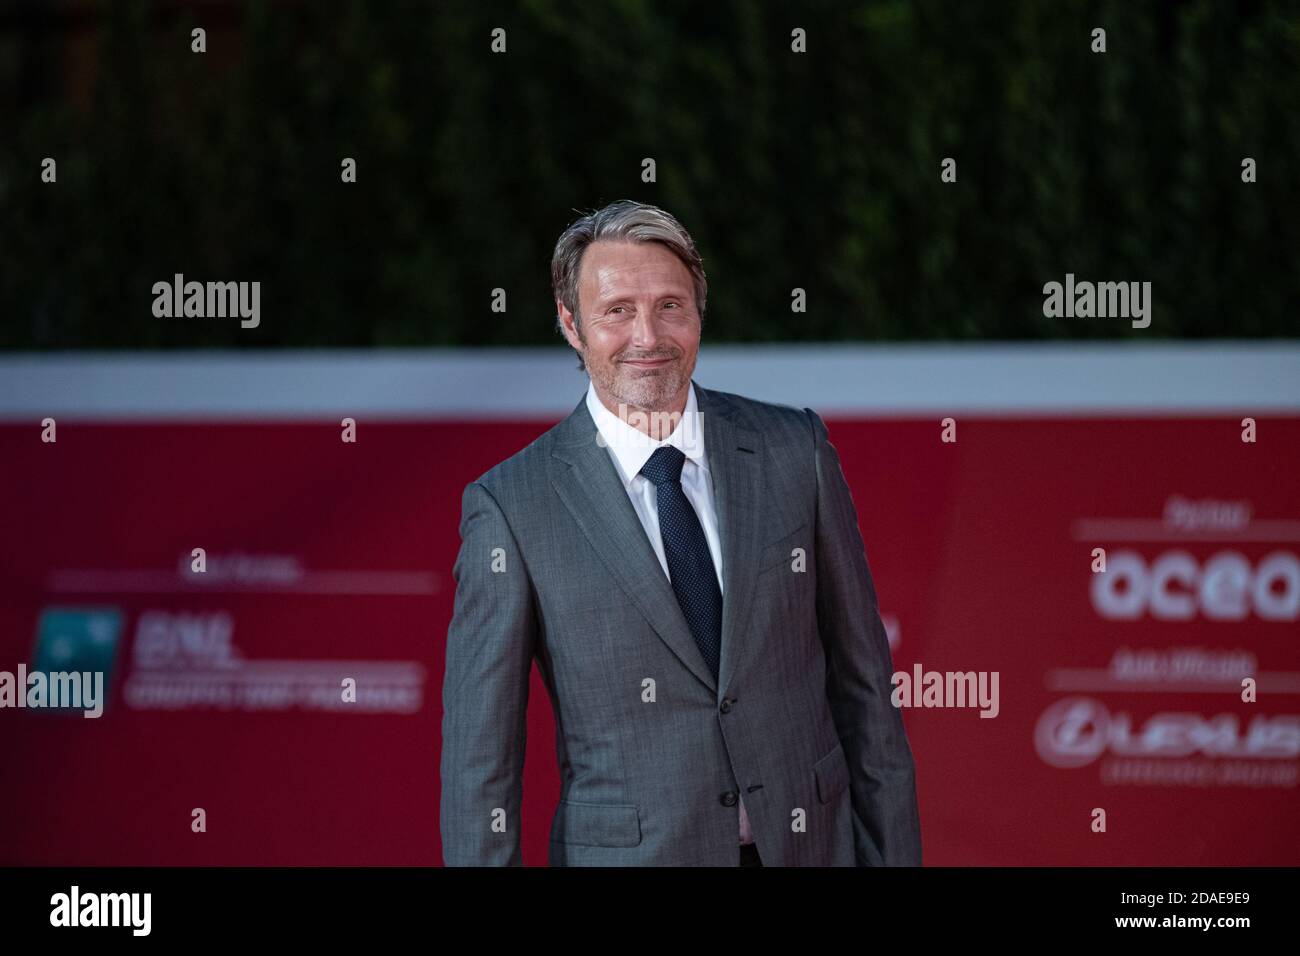 Roma, 20. Oktober 2020, Mads Mikkelsen, nimmt am Roten Teppich des Roma Film Festival 2020 Teil Stockfoto